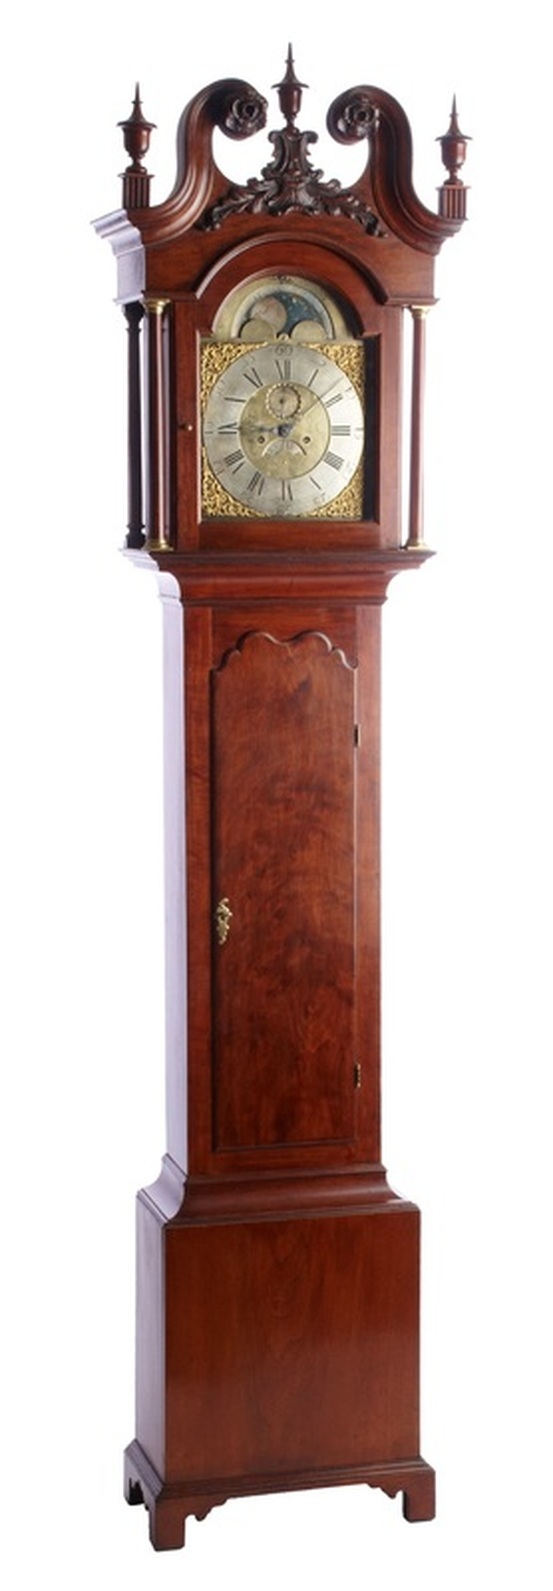 TALL CASE CLOCK BY HUGH BIGHAM MARSH CREEK (NOW GETTYSBURG) PA CIRCA 1770